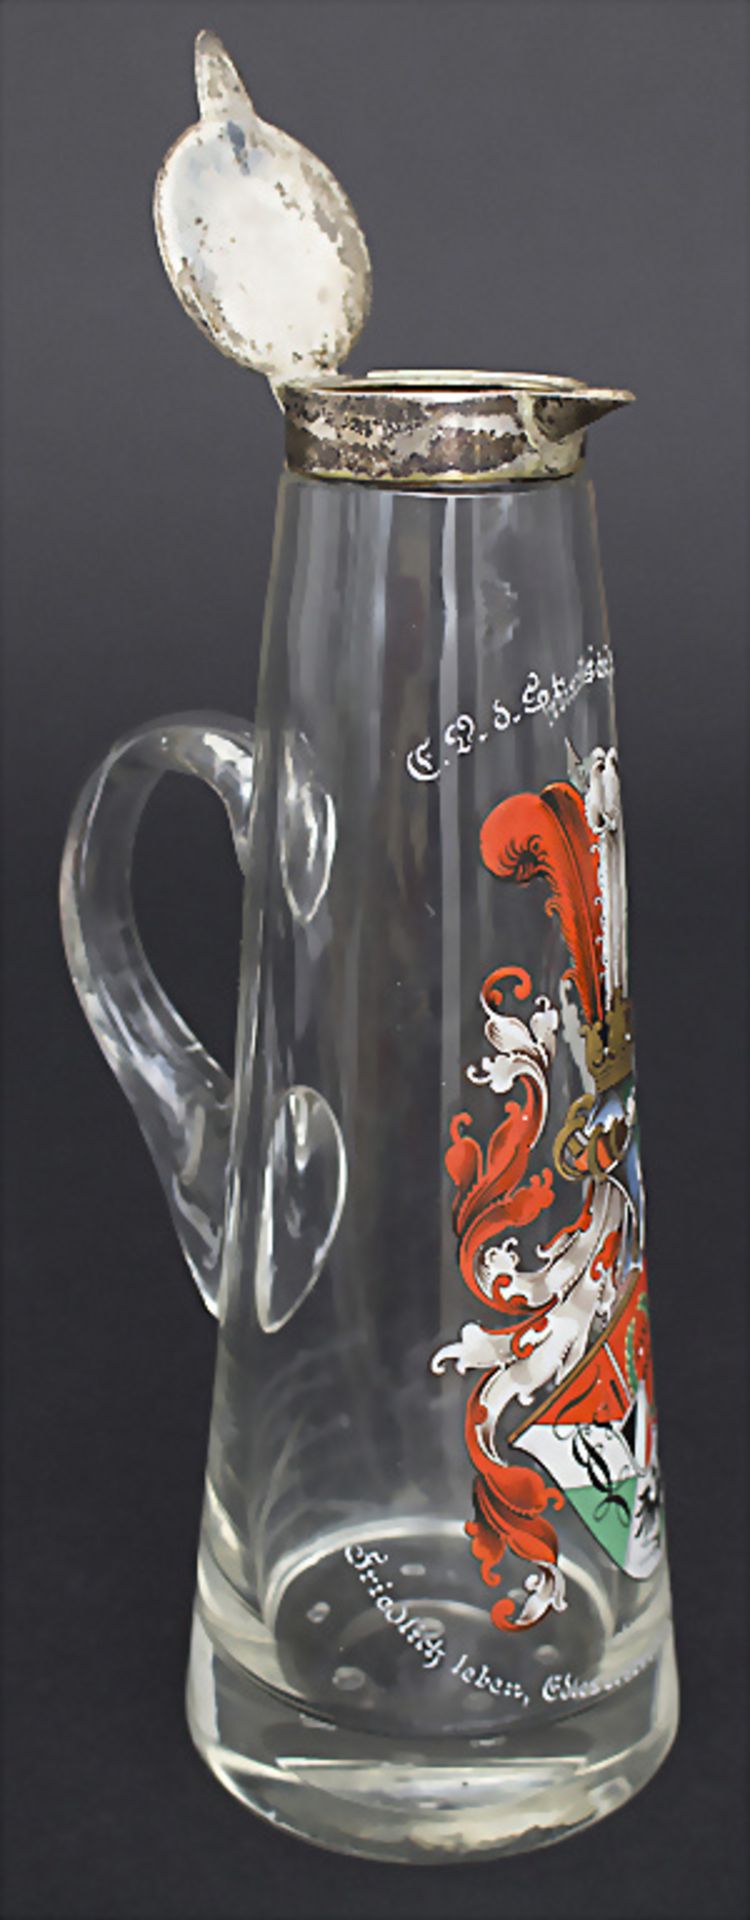 Burschenschaft-Schenkkrug / A fraternity glass jug, um 1903 - Image 4 of 9